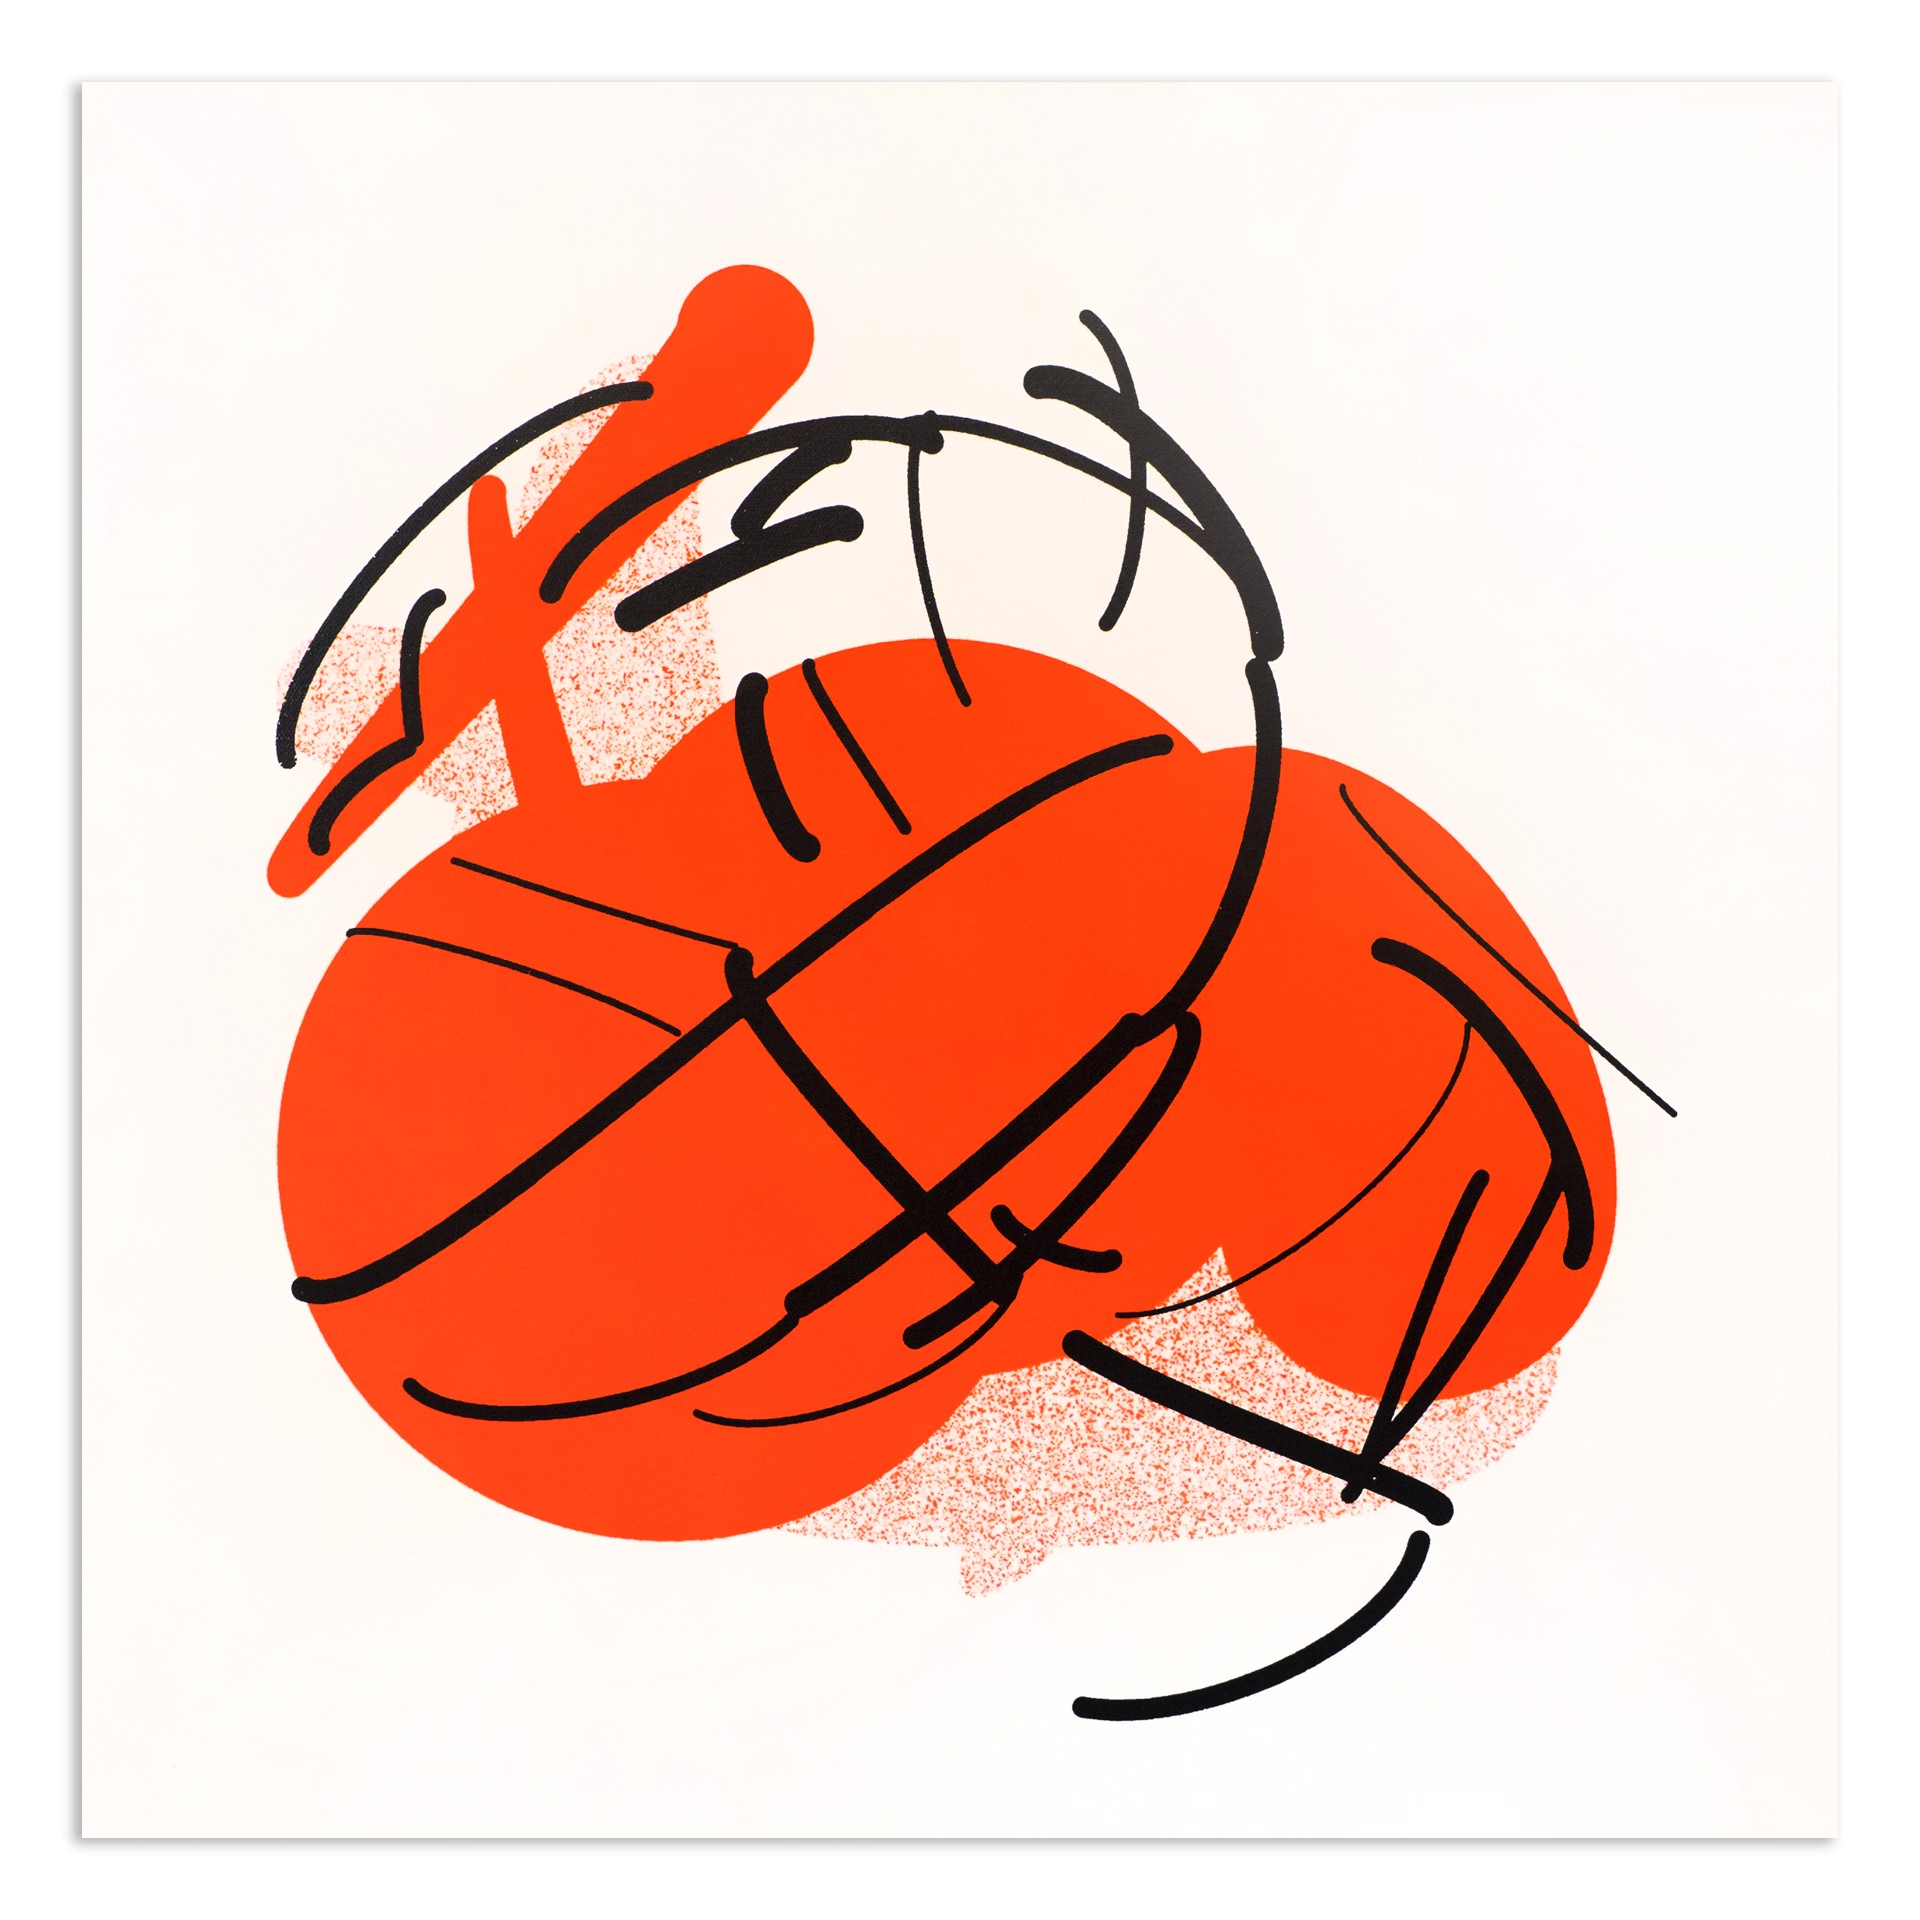 Basketball by Tom White